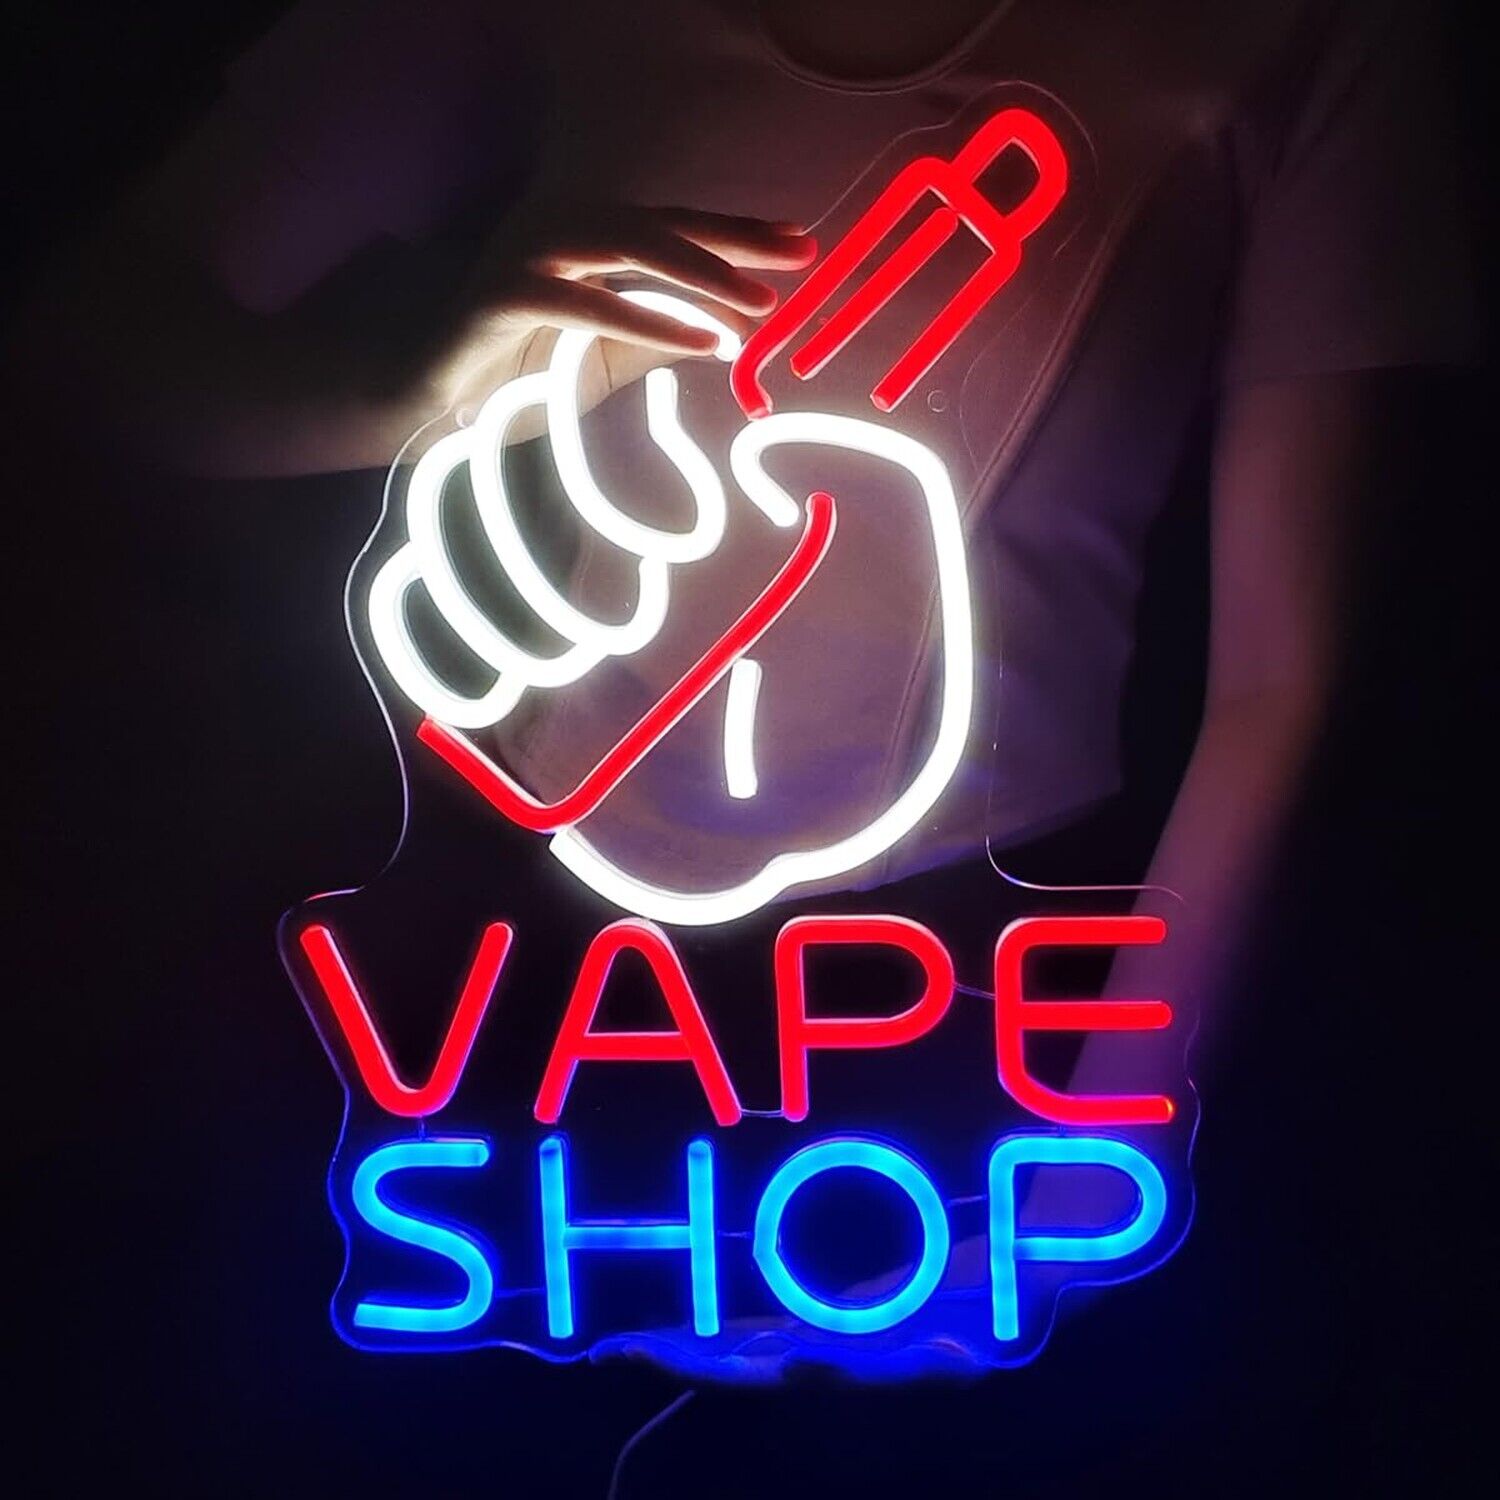 Planzo VAPE Shop Neon Sign for Smoke Shop LED Light Up E-cigar Business Store...